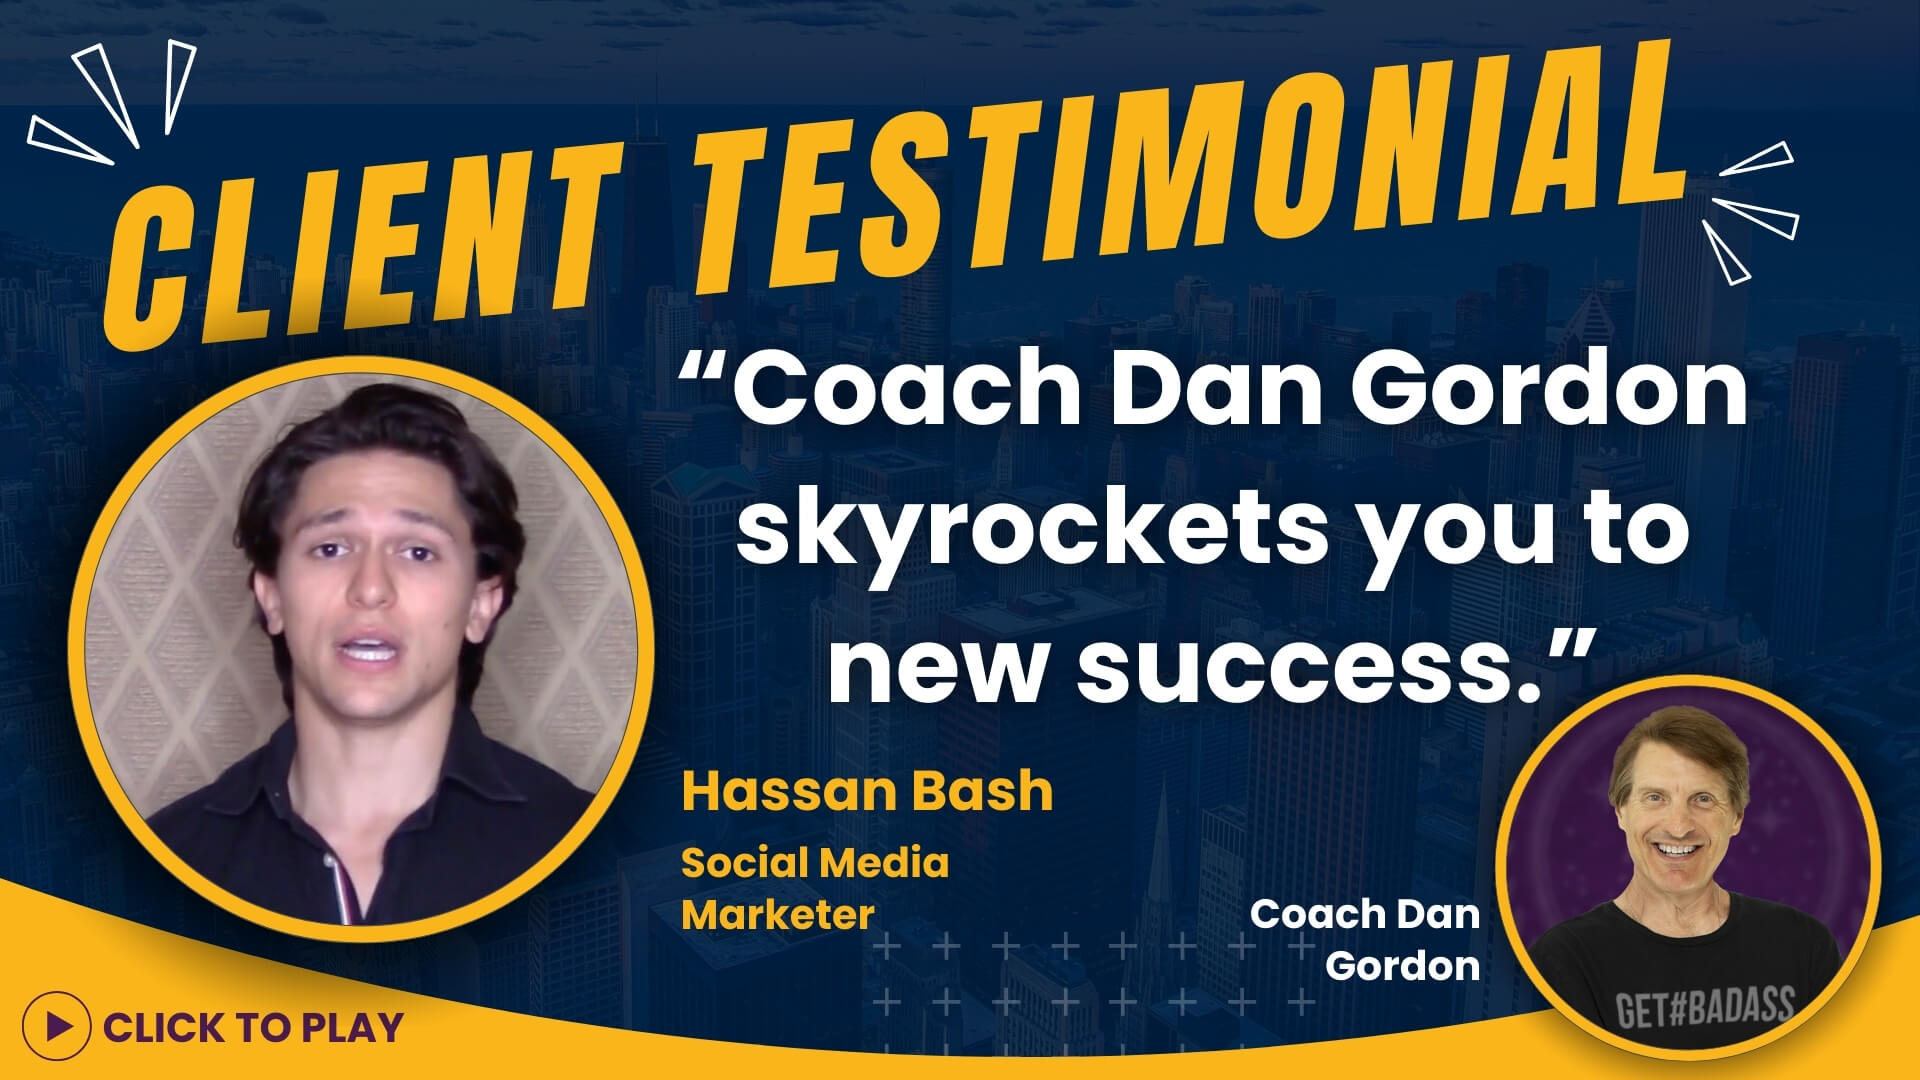 Hassan Bash, dressed in a casual black shirt, praising Coach Dan Gordon's role in his career success.